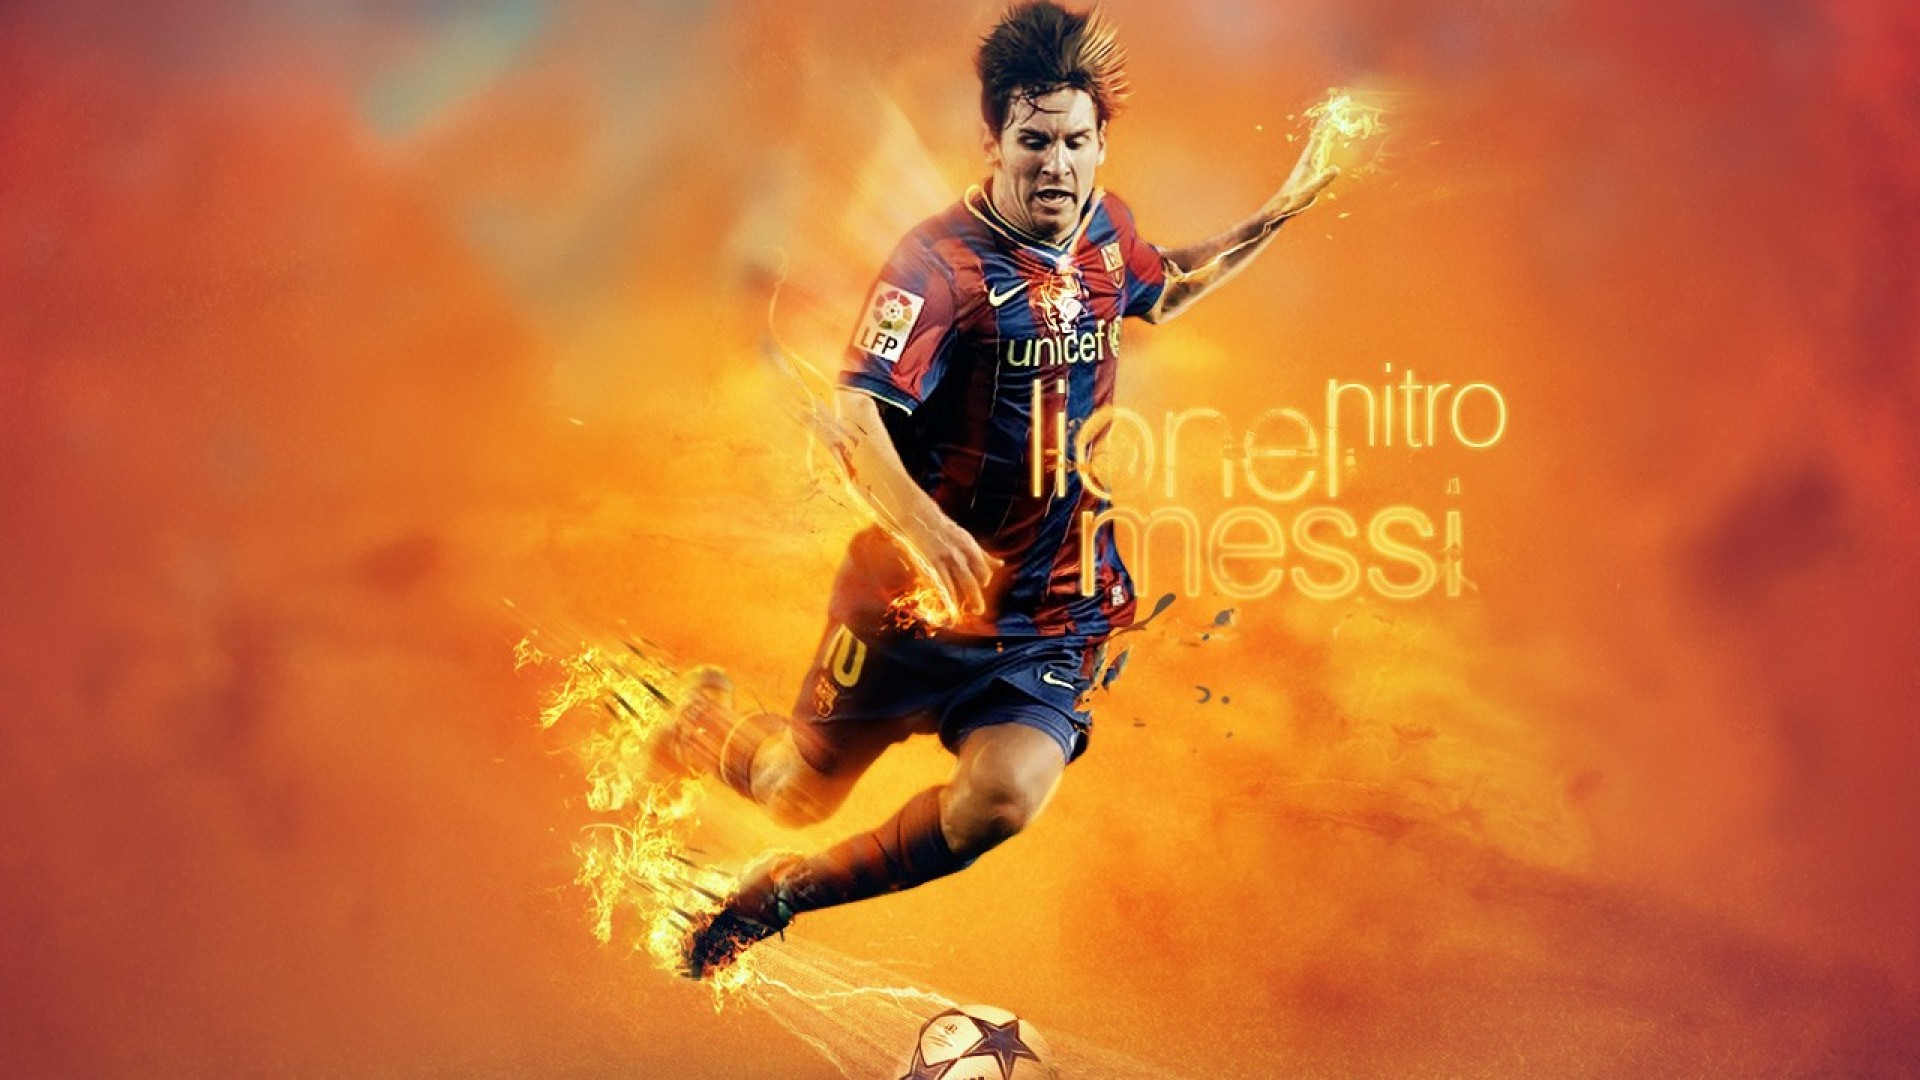 Soccer Lionel Messi HD wallpaper